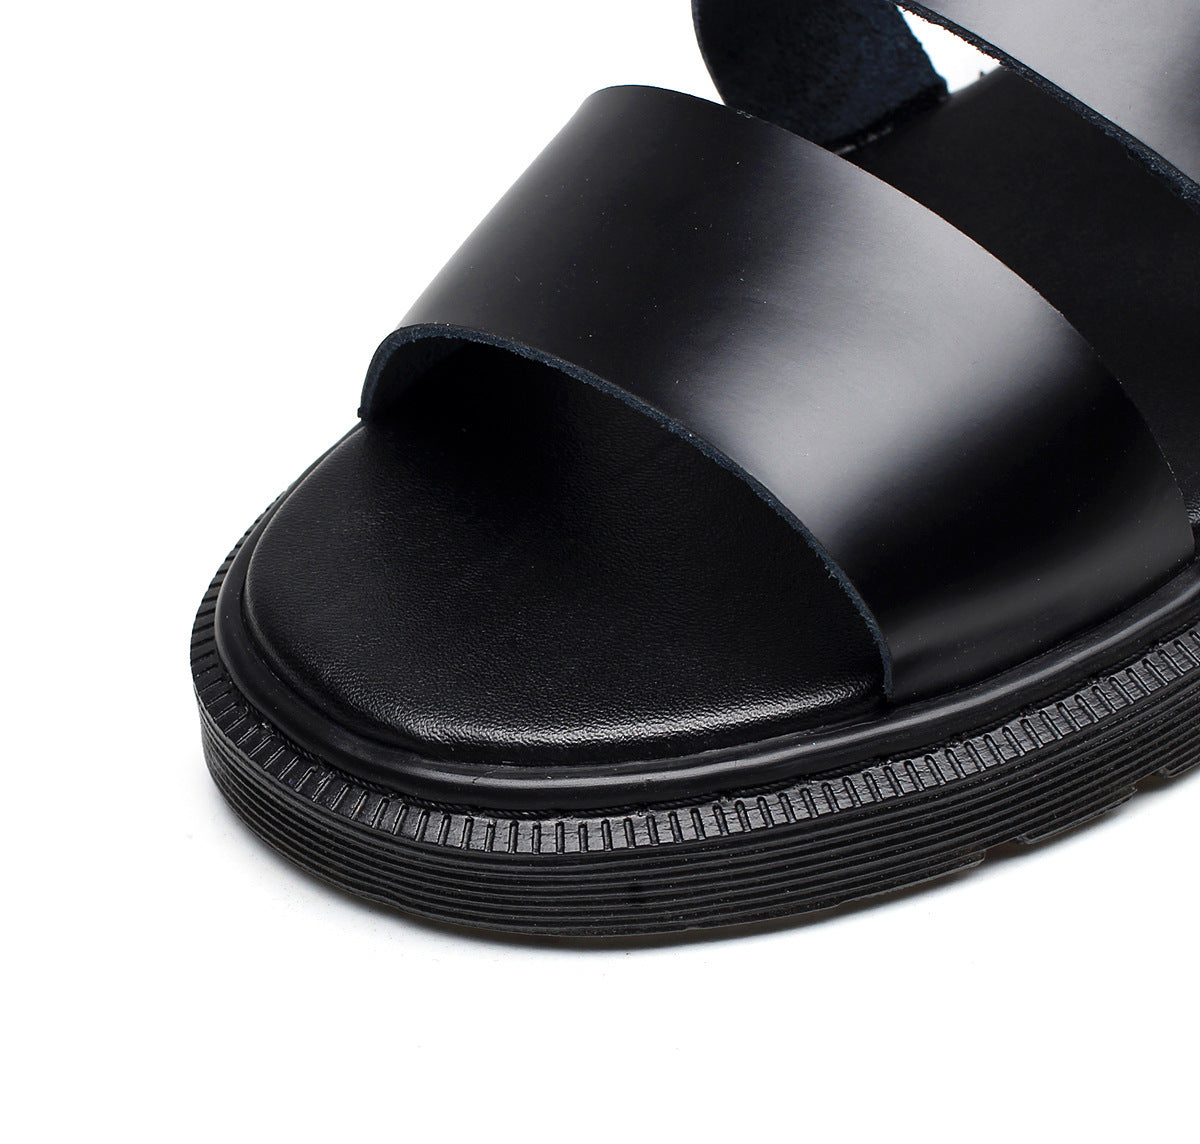 CARVAN GRYPHON PISA Leather Platform Sandals - Stylish & Comfortable - Carvan Mart